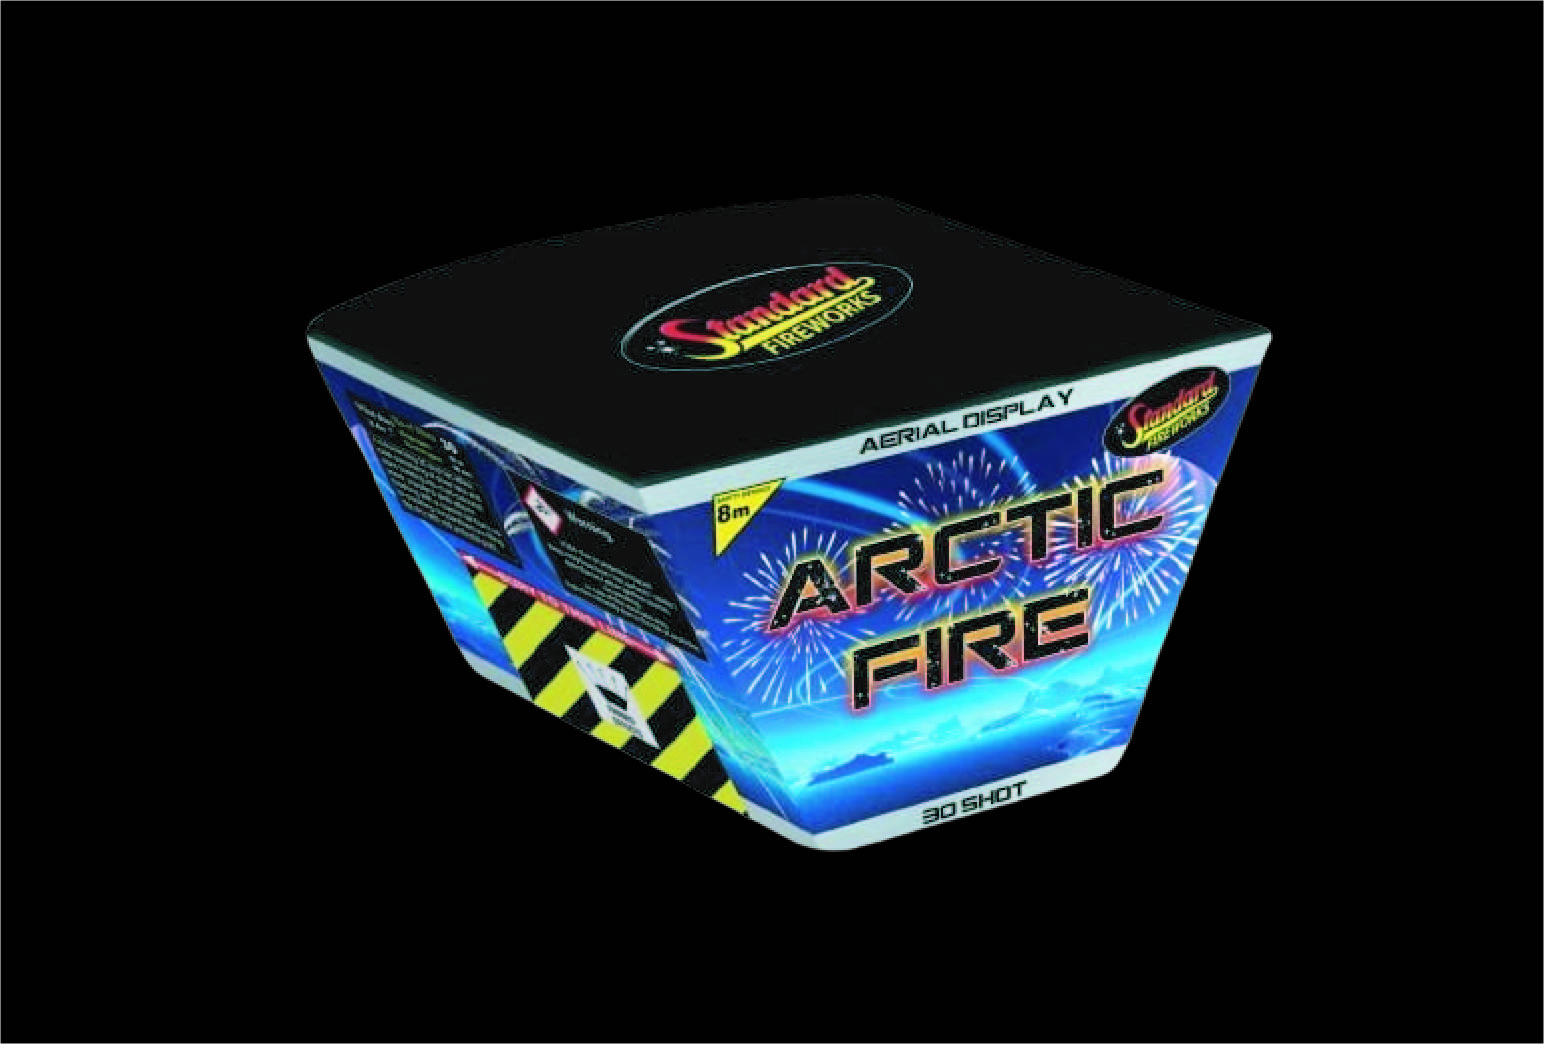 Arctic Fire